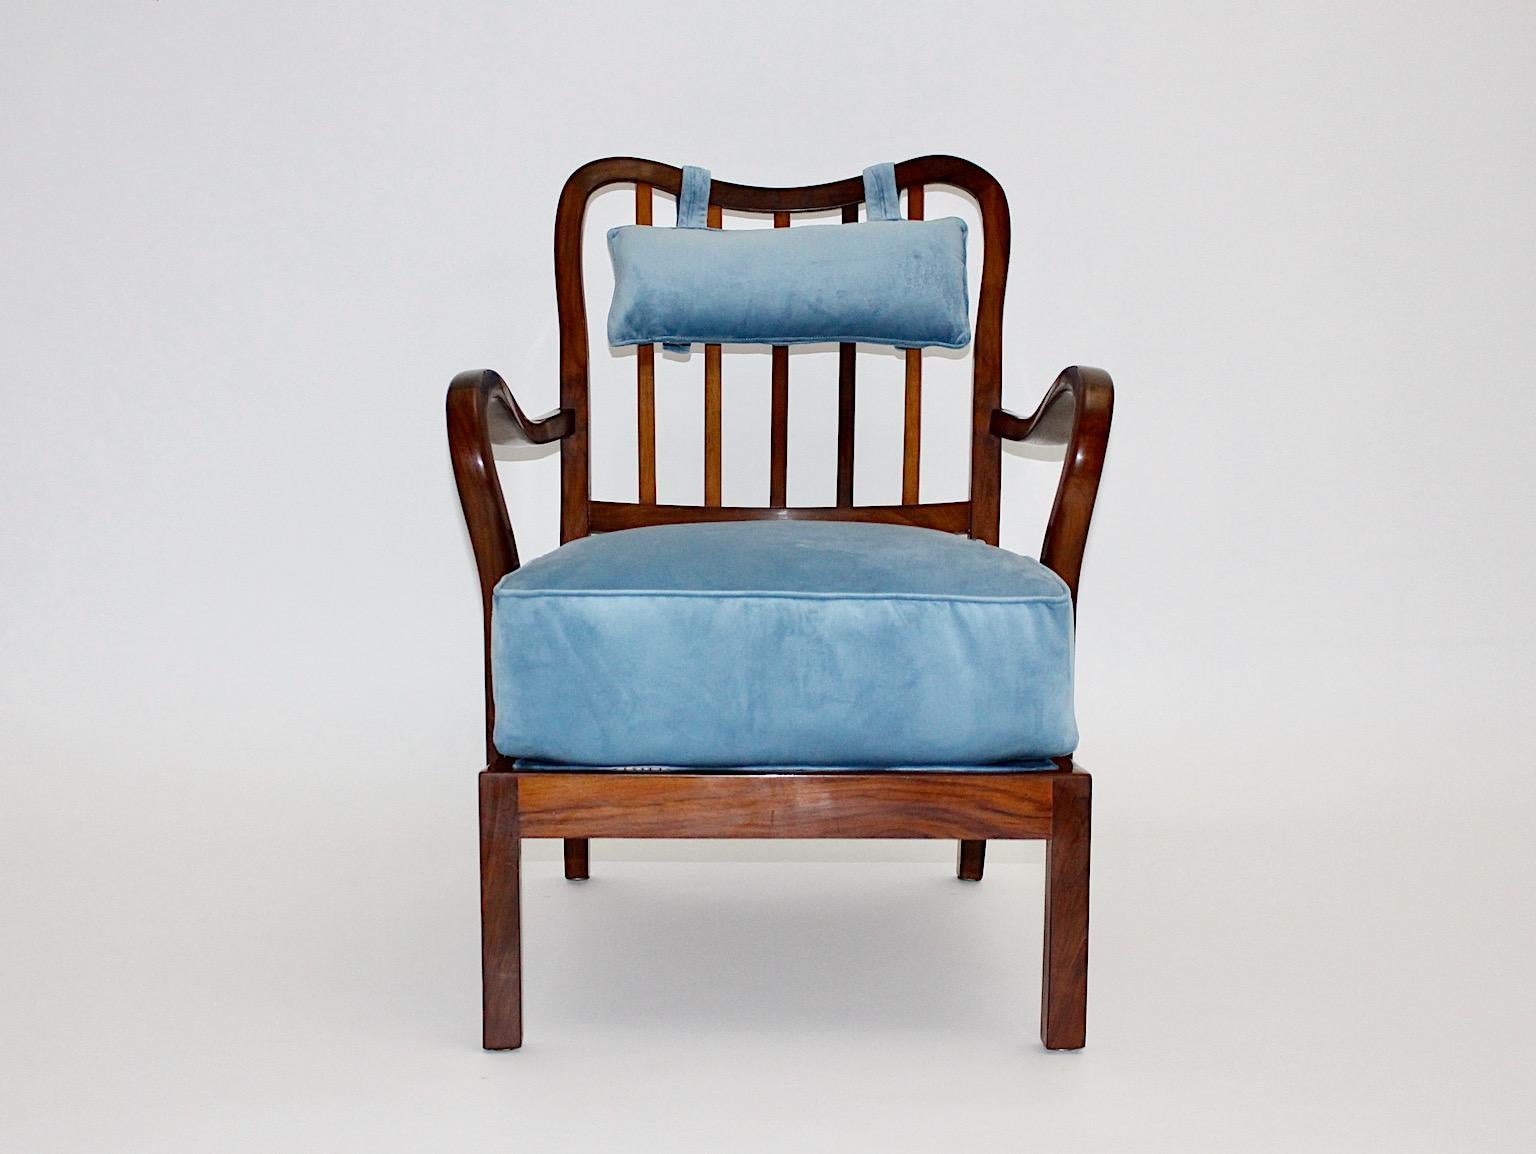 Art Deco Walnut Vintage Lounge Chair Armchair Attr. Oswald Haerdtl 1930s Vienna For Sale 4